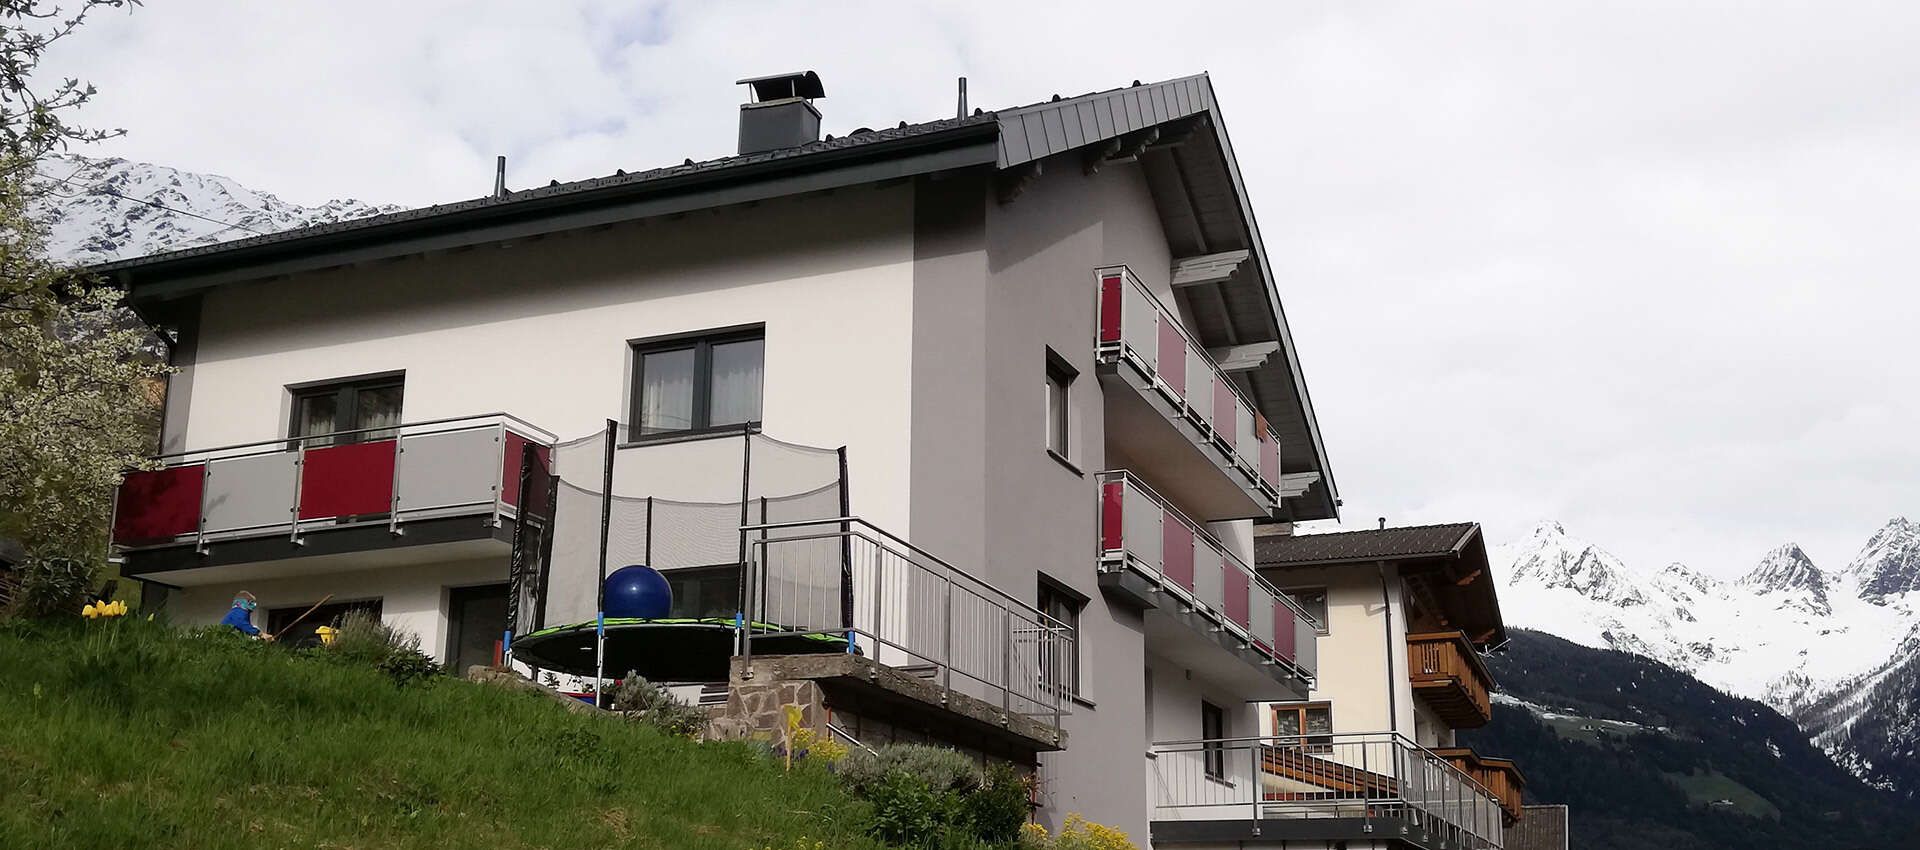 Apart Alpinea in Kauns in Tirol